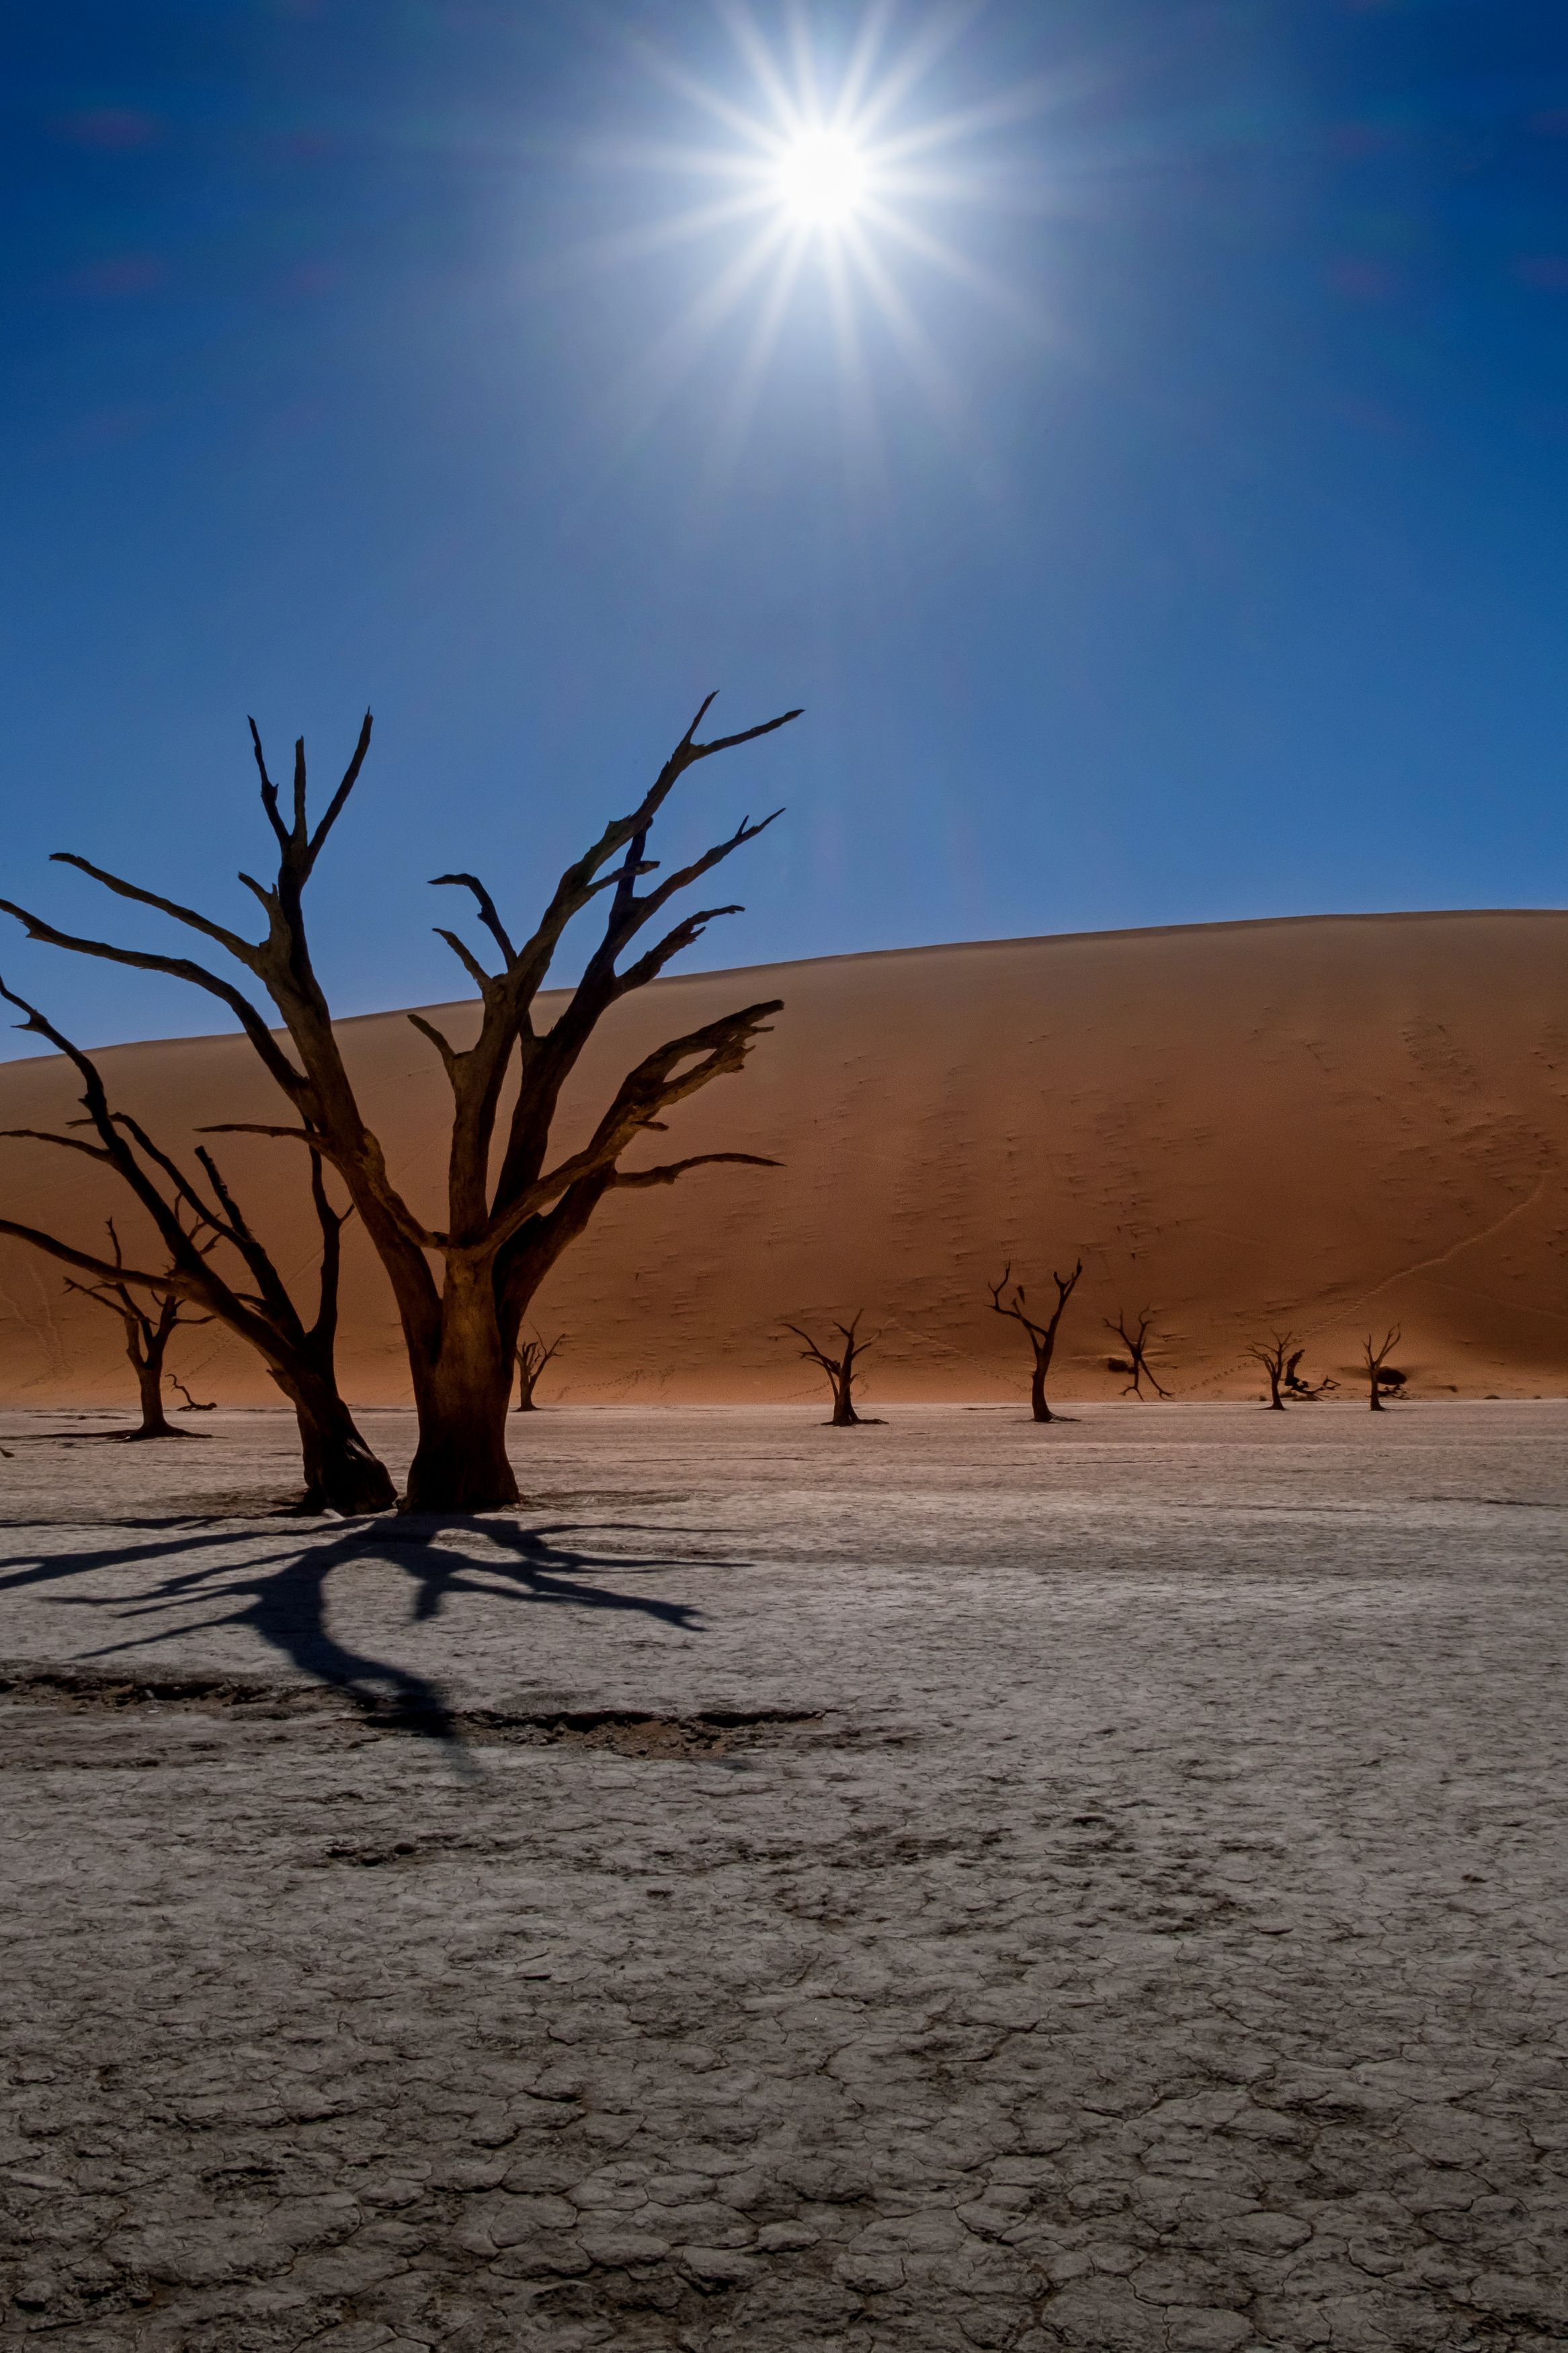 солнце, африка, намибия, соссусфлей, дюна, пустыня, sossusvlei, песок, africa, нд, namibia, sossusflei, dune, desert, sand, пейзаж, природа, намибия нд, Демкина Надежда